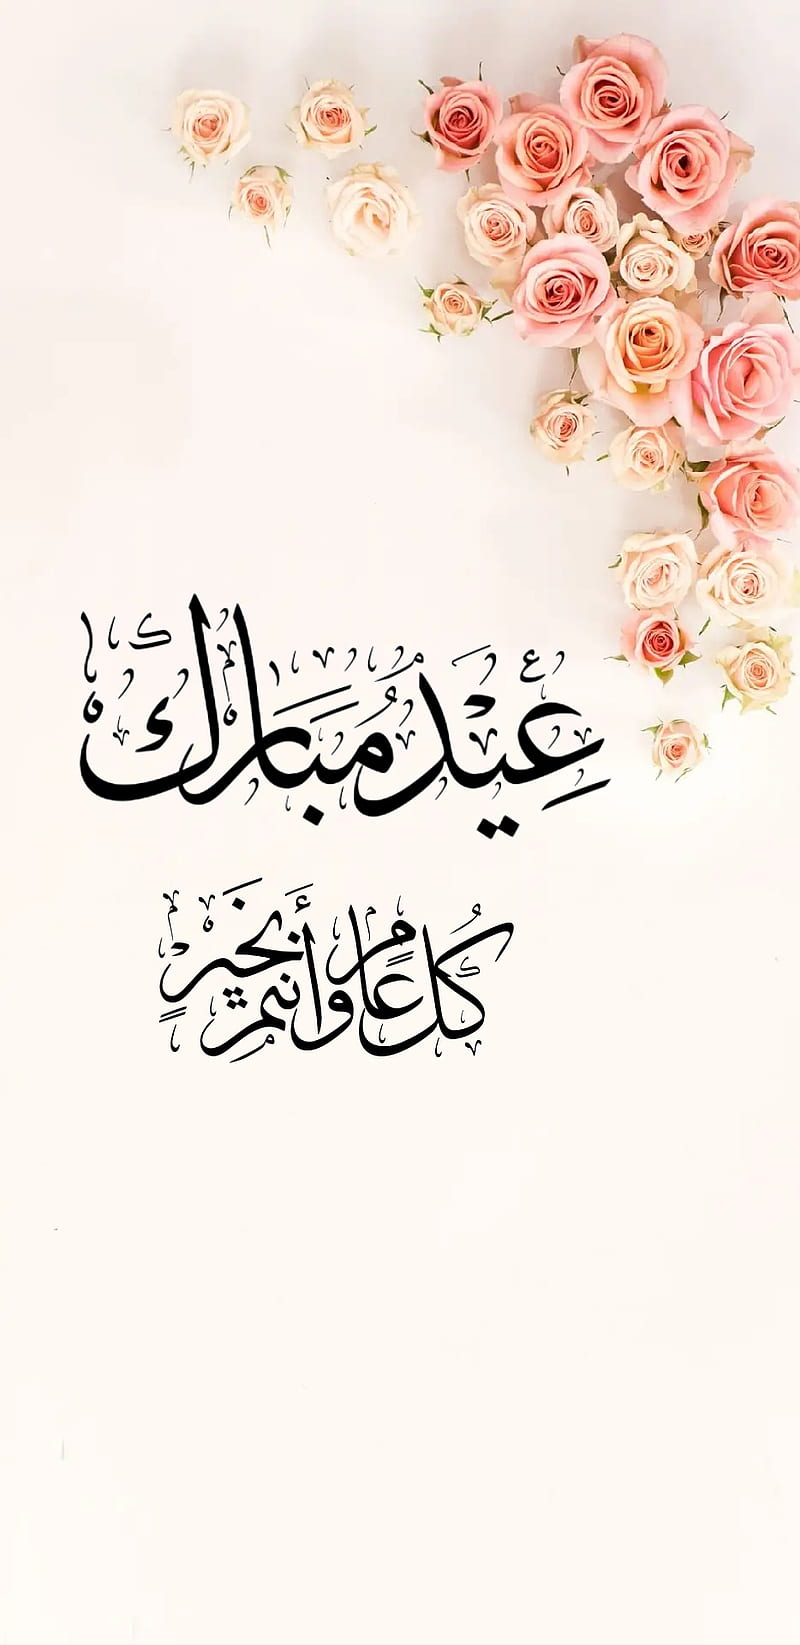 eid mubarak love wallpapers